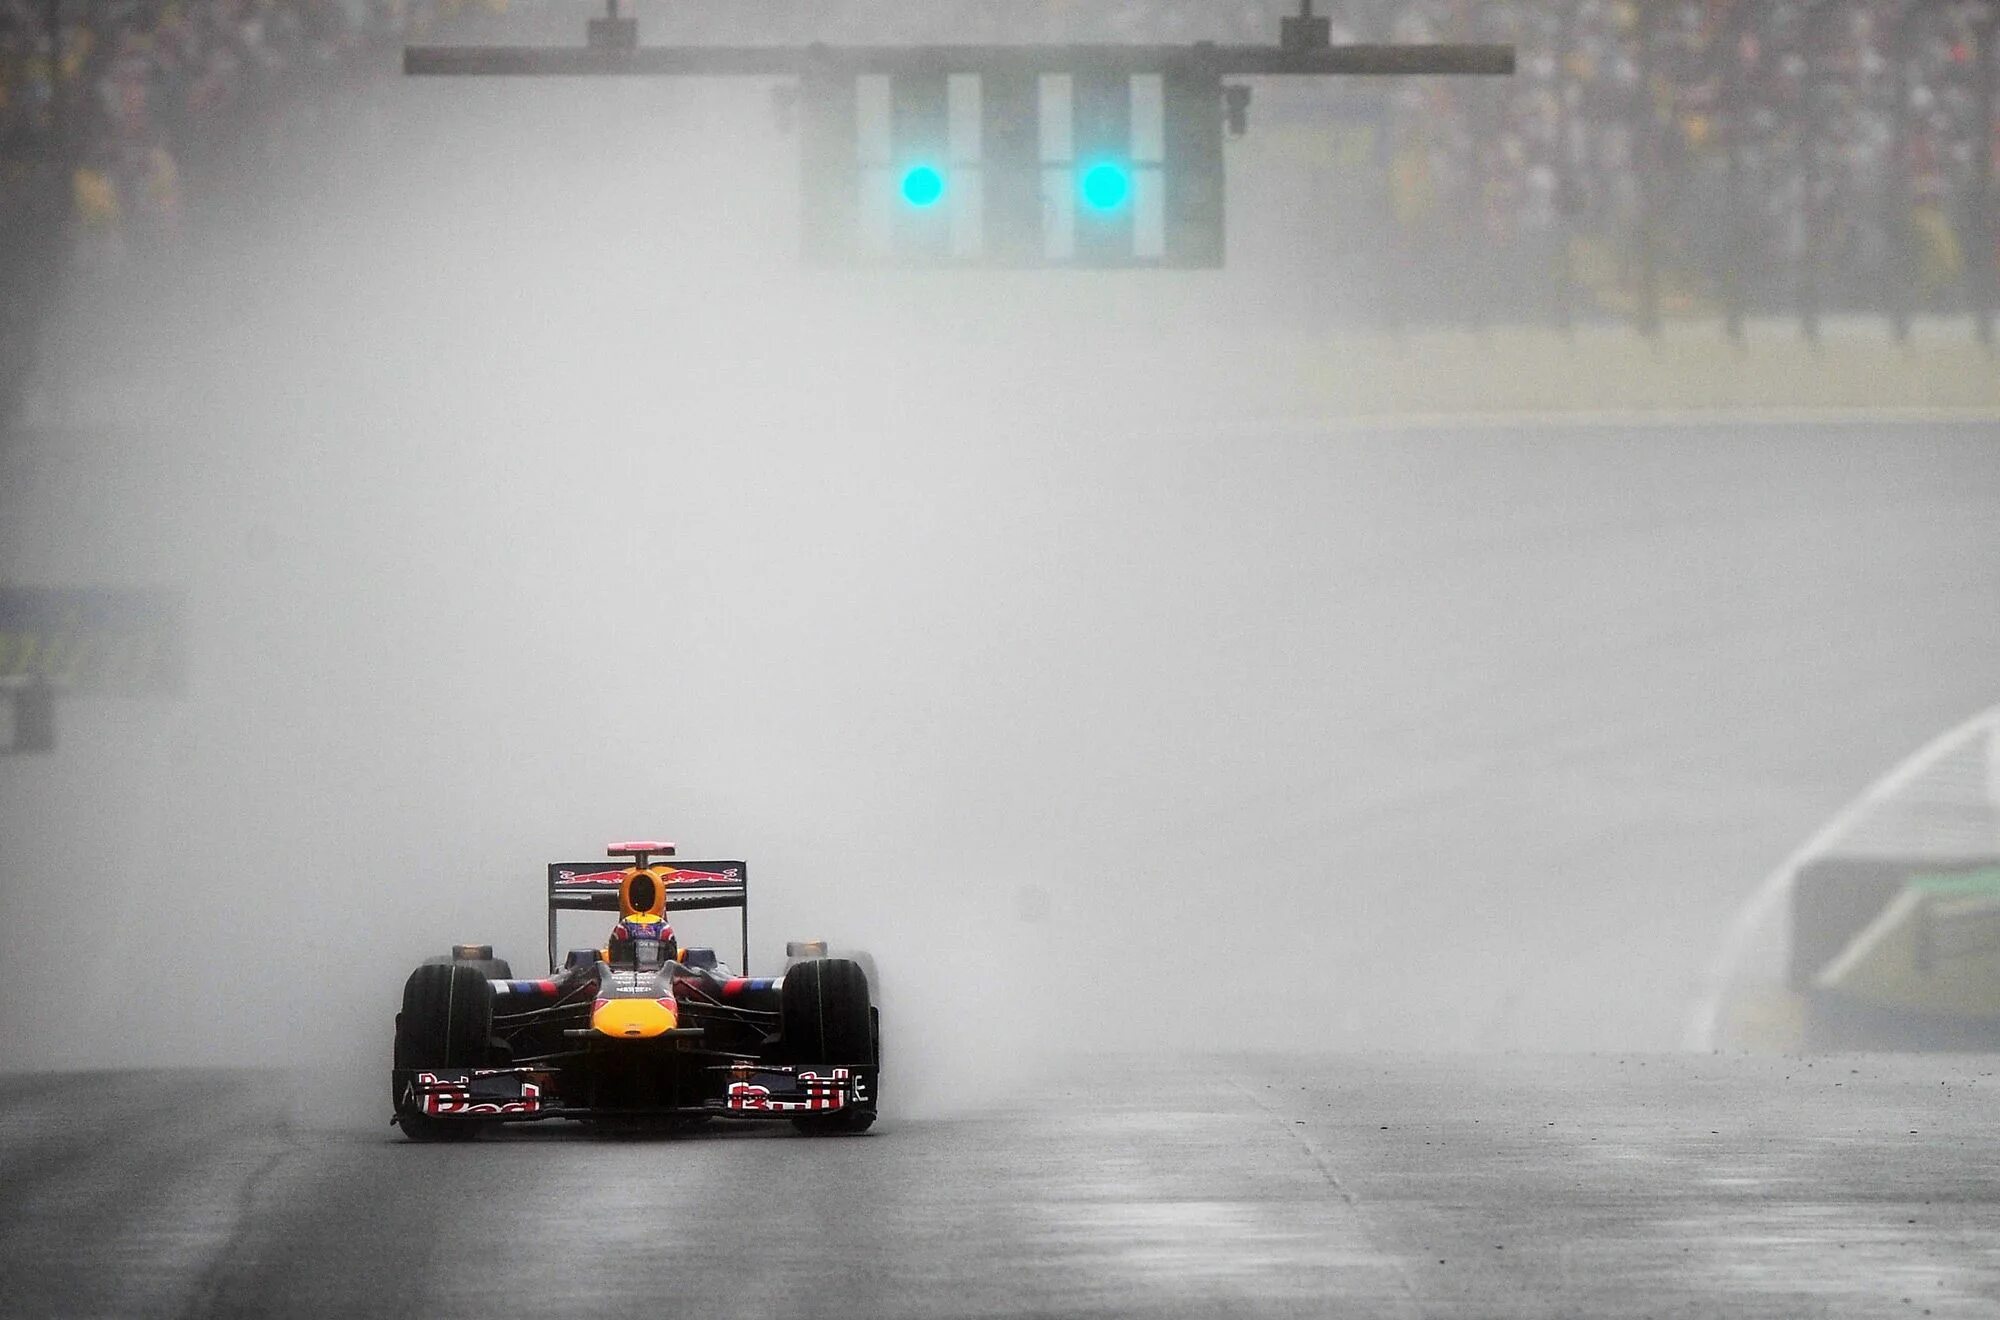 F rain. F1 Rain. F1 2009 Rain Tyres. Rain f1 car. Формула 1 дождь.